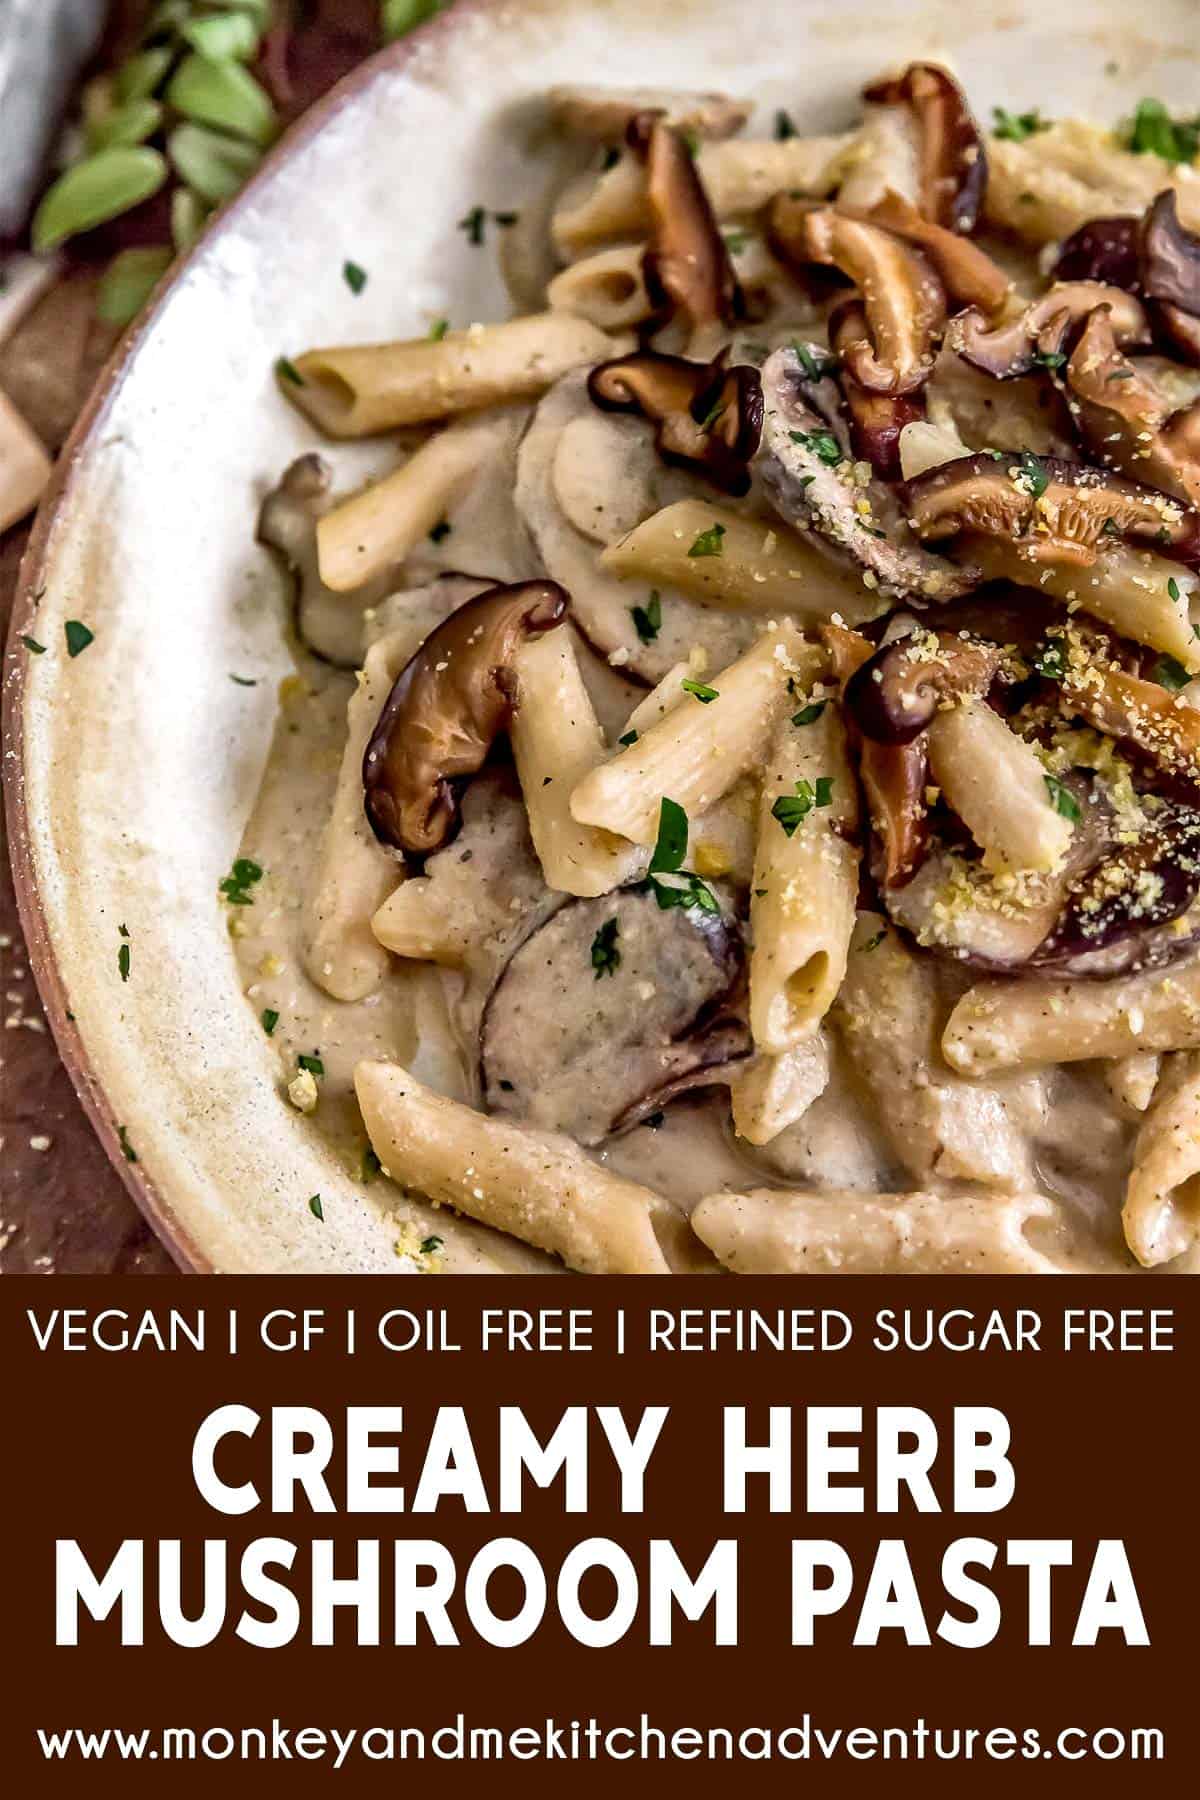 Creamy Herb Mushroom Pasta with Text description